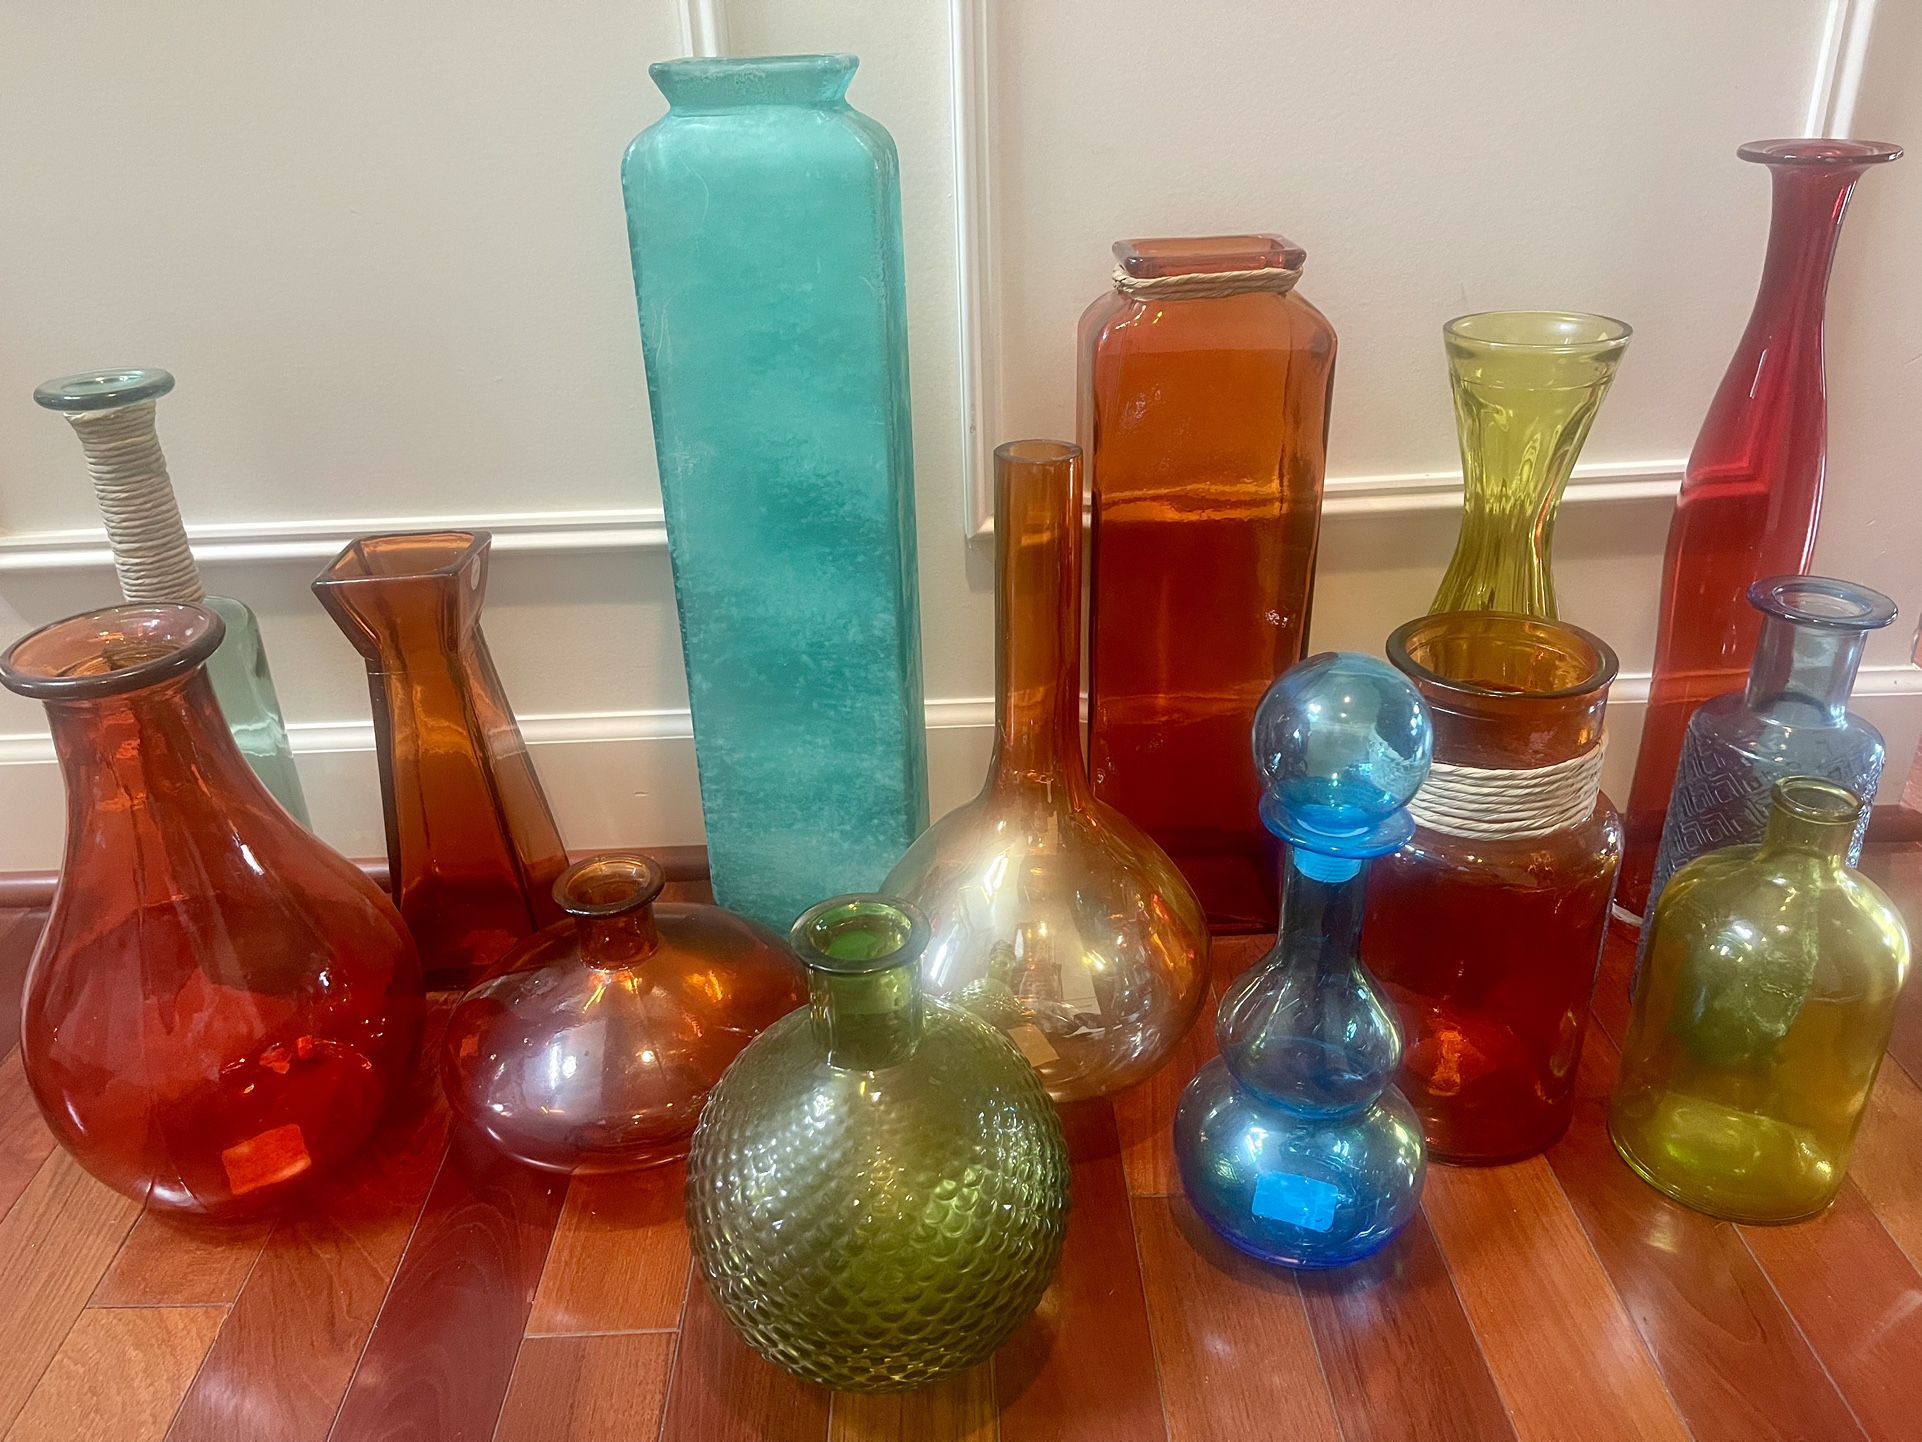 Colorful Decorative Bottles